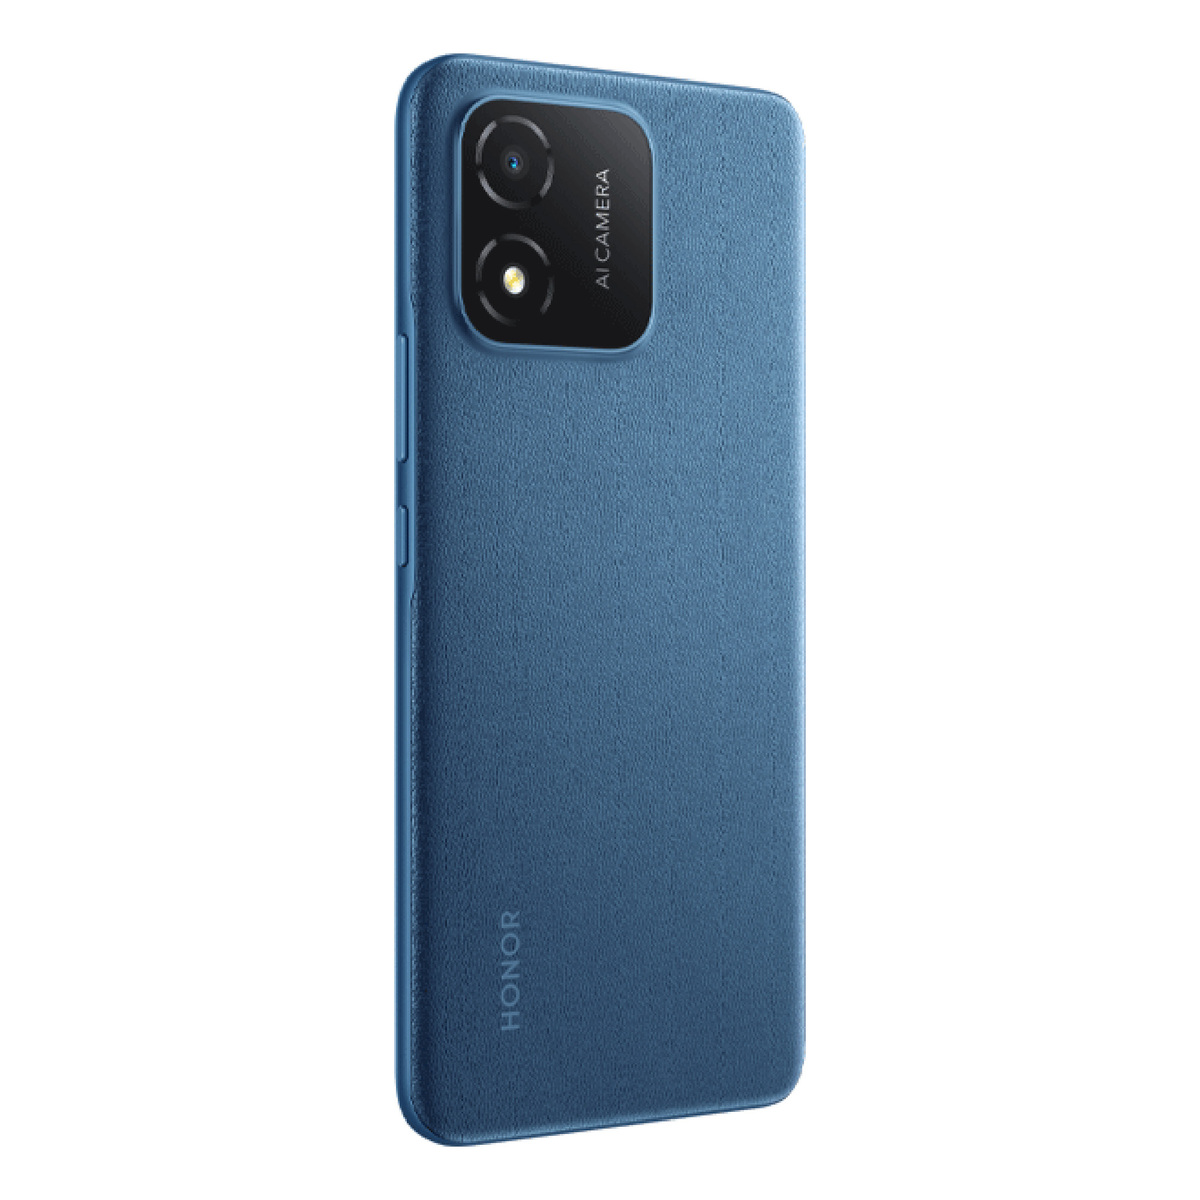 Honor X5 Dual Sim 4G Smart Phone, 2 GB RAM, 32 GB Internal Storage, Ocean Blue, VNA-LX2